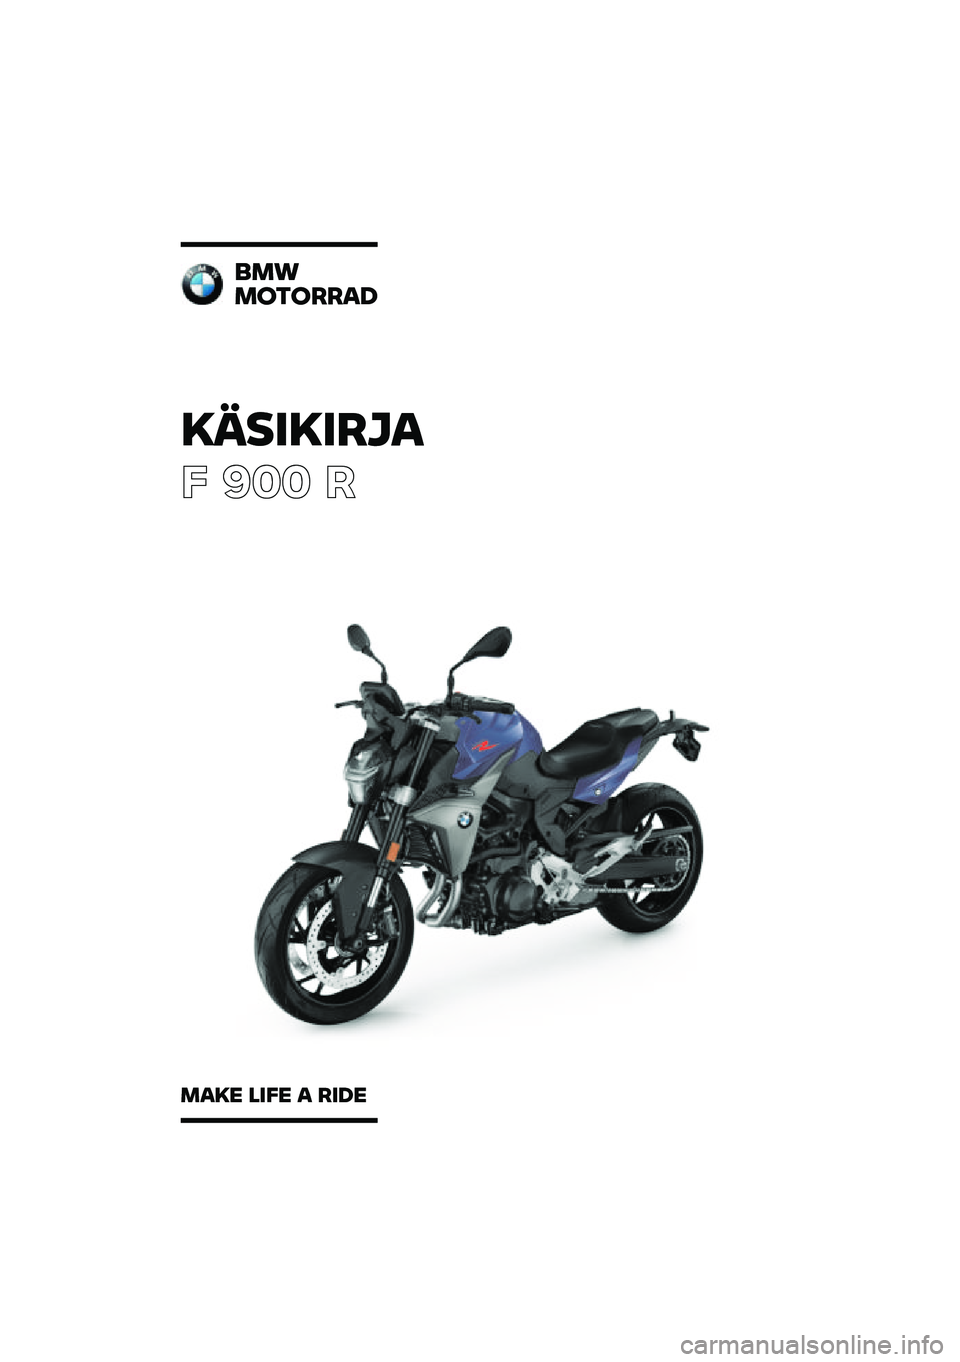 BMW MOTORRAD F 900 R 2020  Käsikirja (in Finnish) 